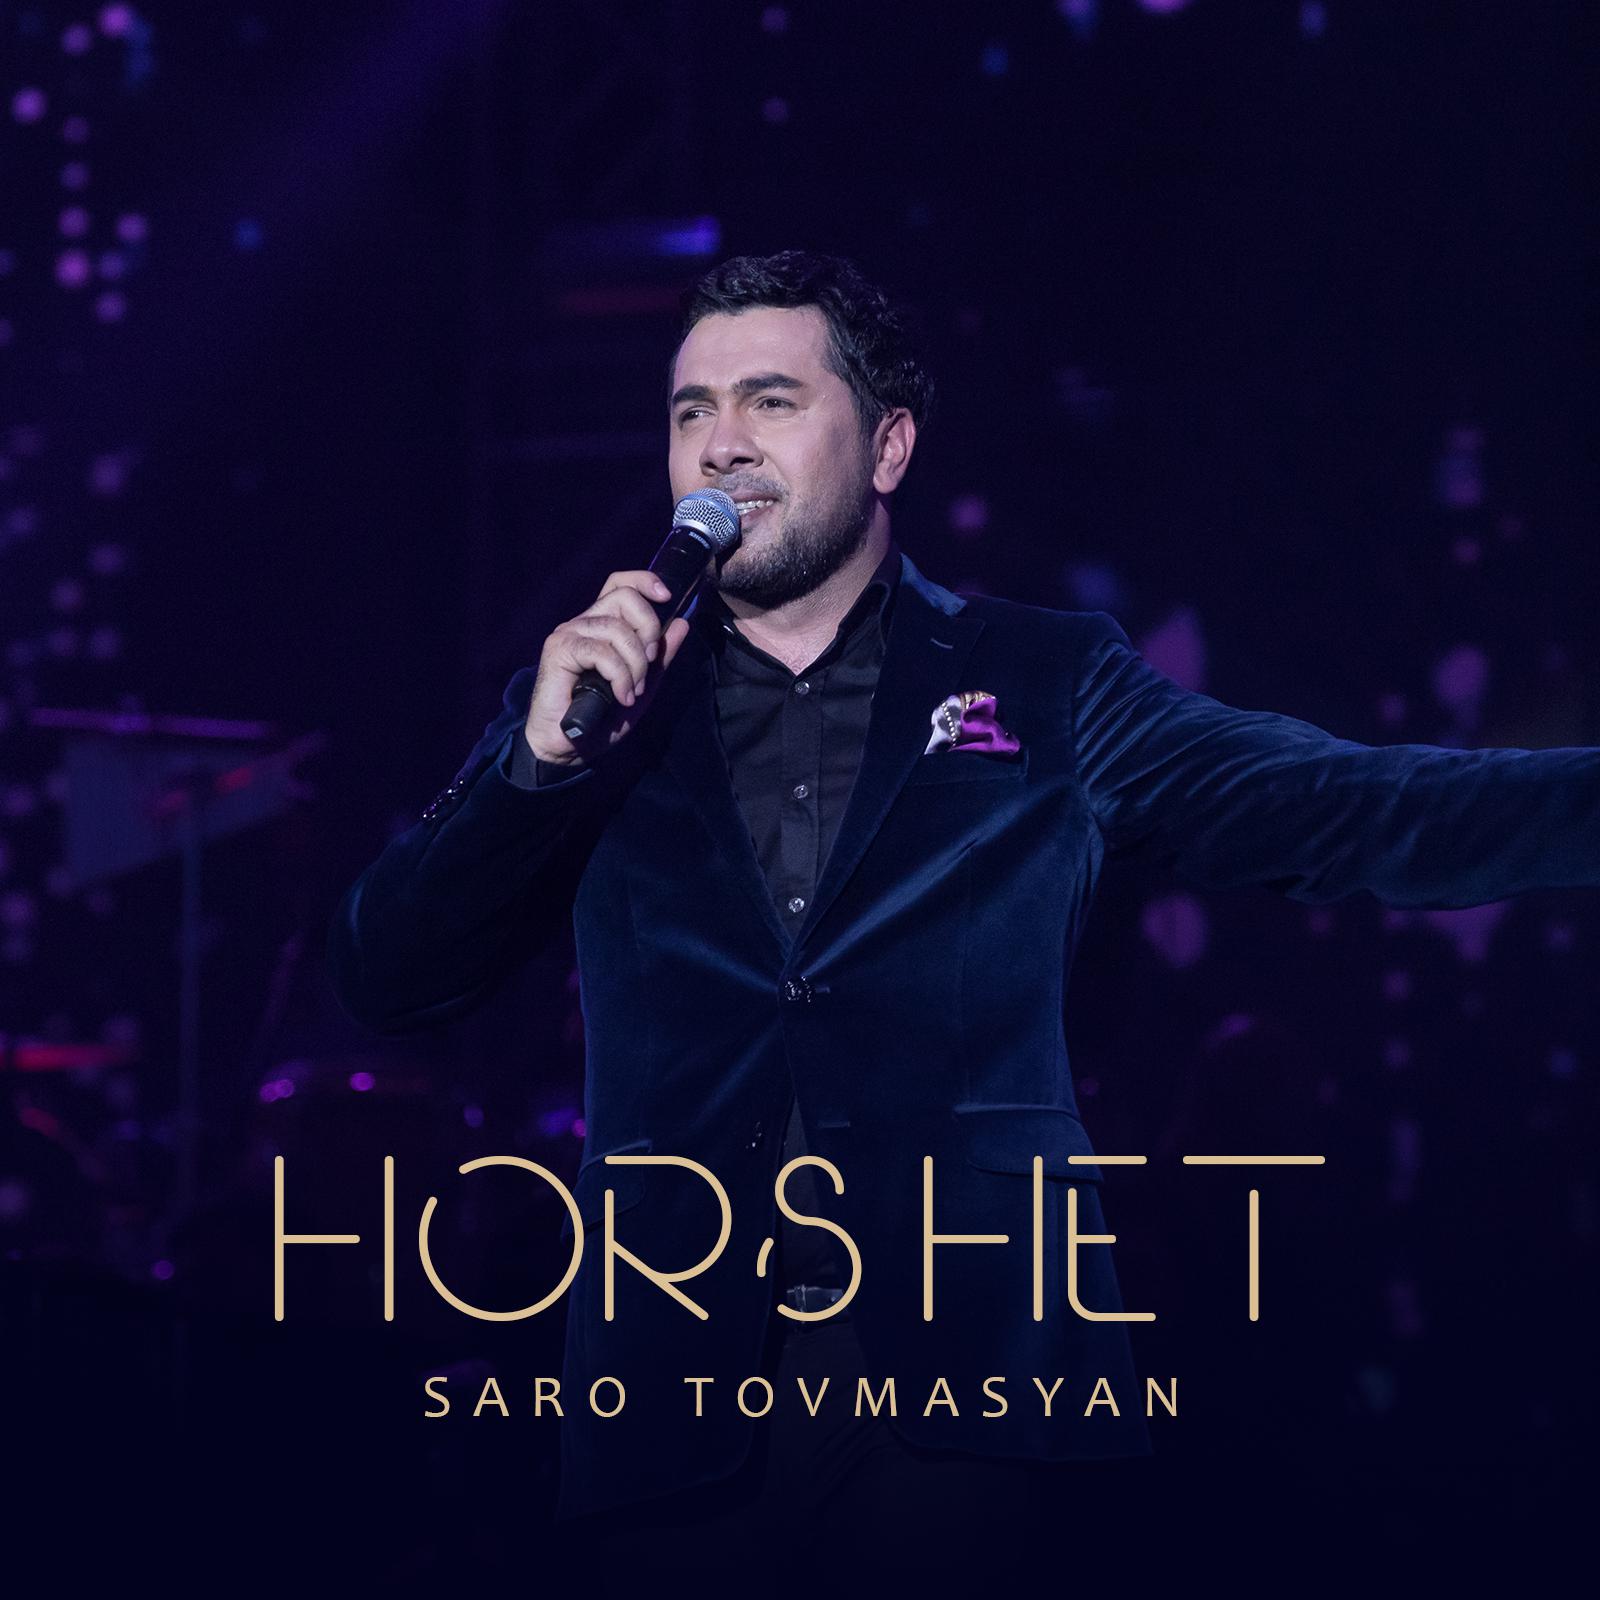 Saro Tovmasyan - Hors het